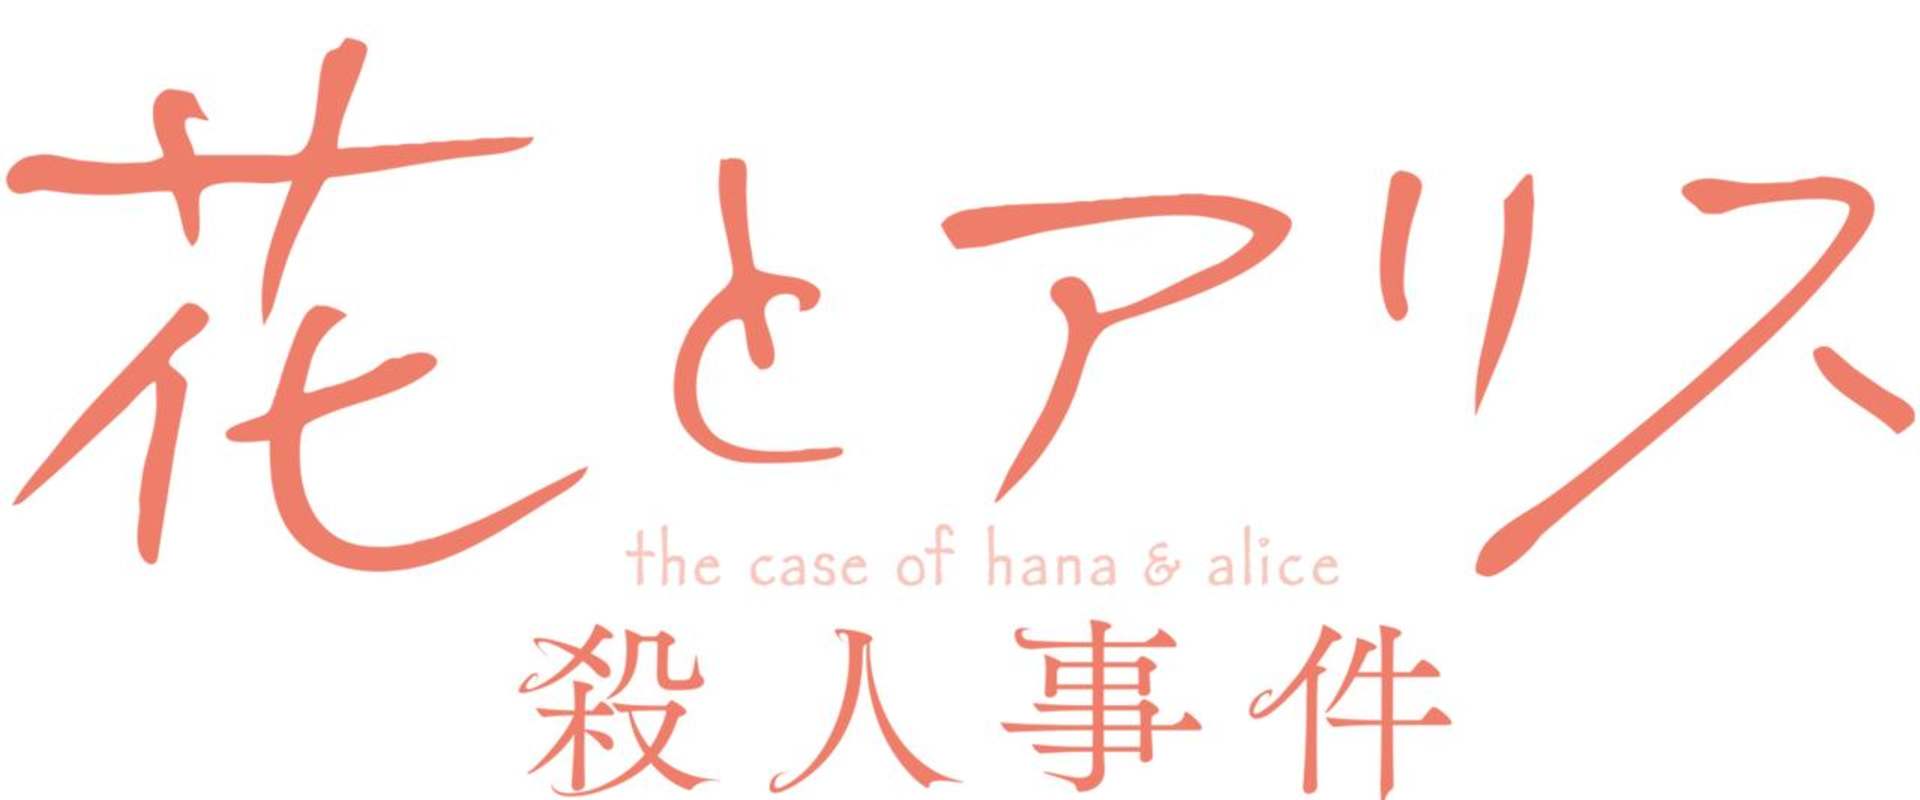 The Case of Hana & Alice background 2